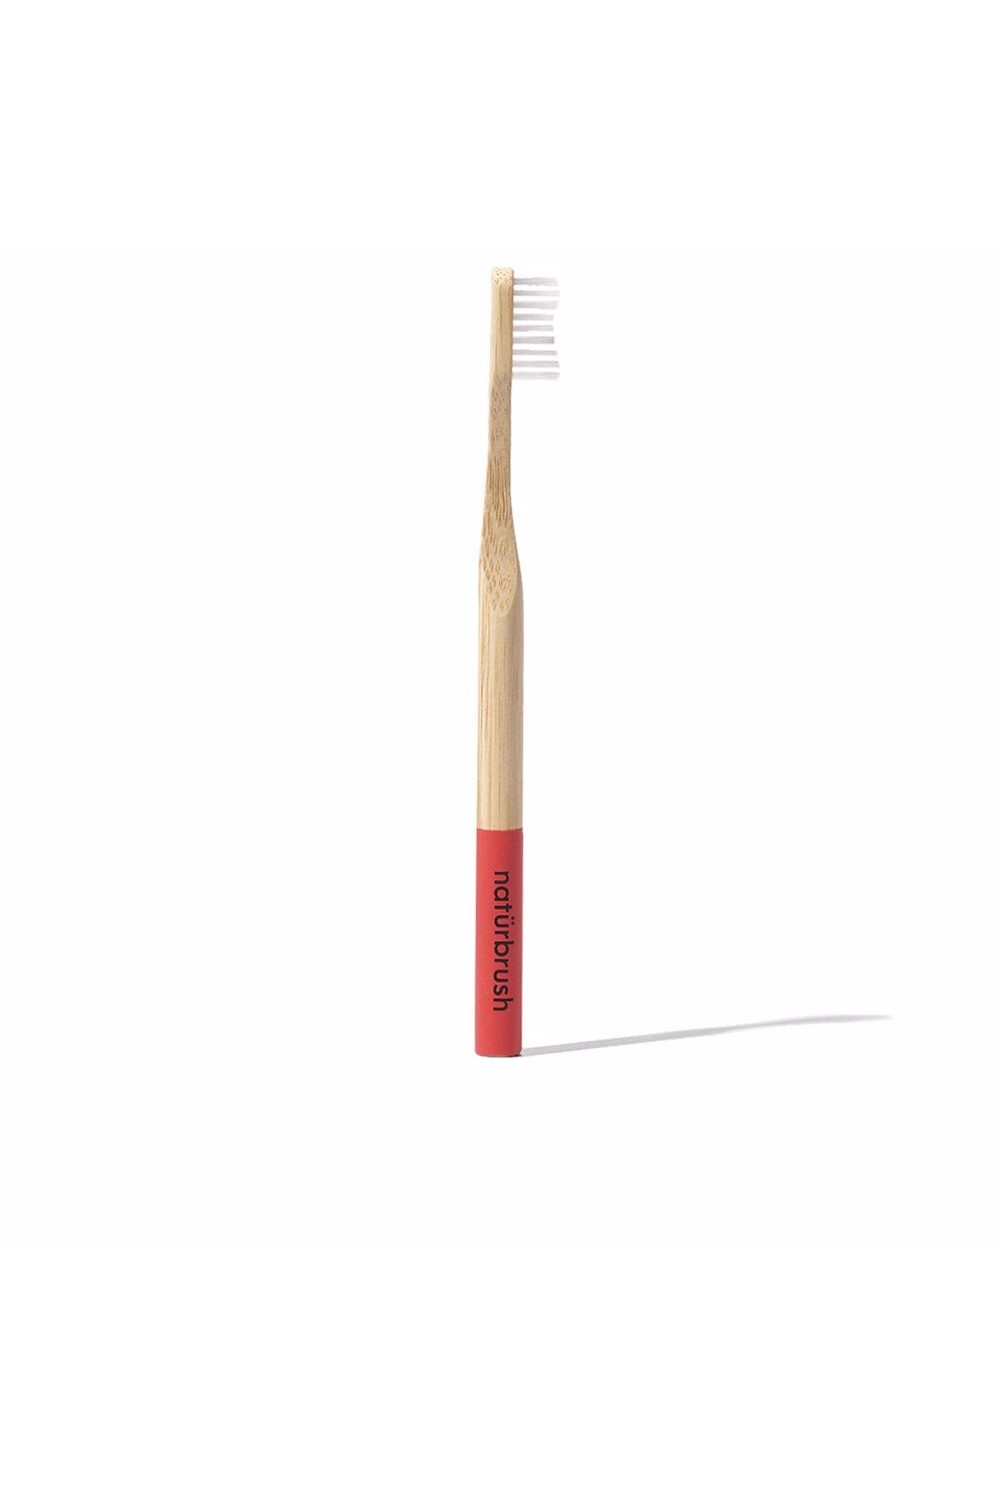 Naturbrush Adult Toothbrush Red